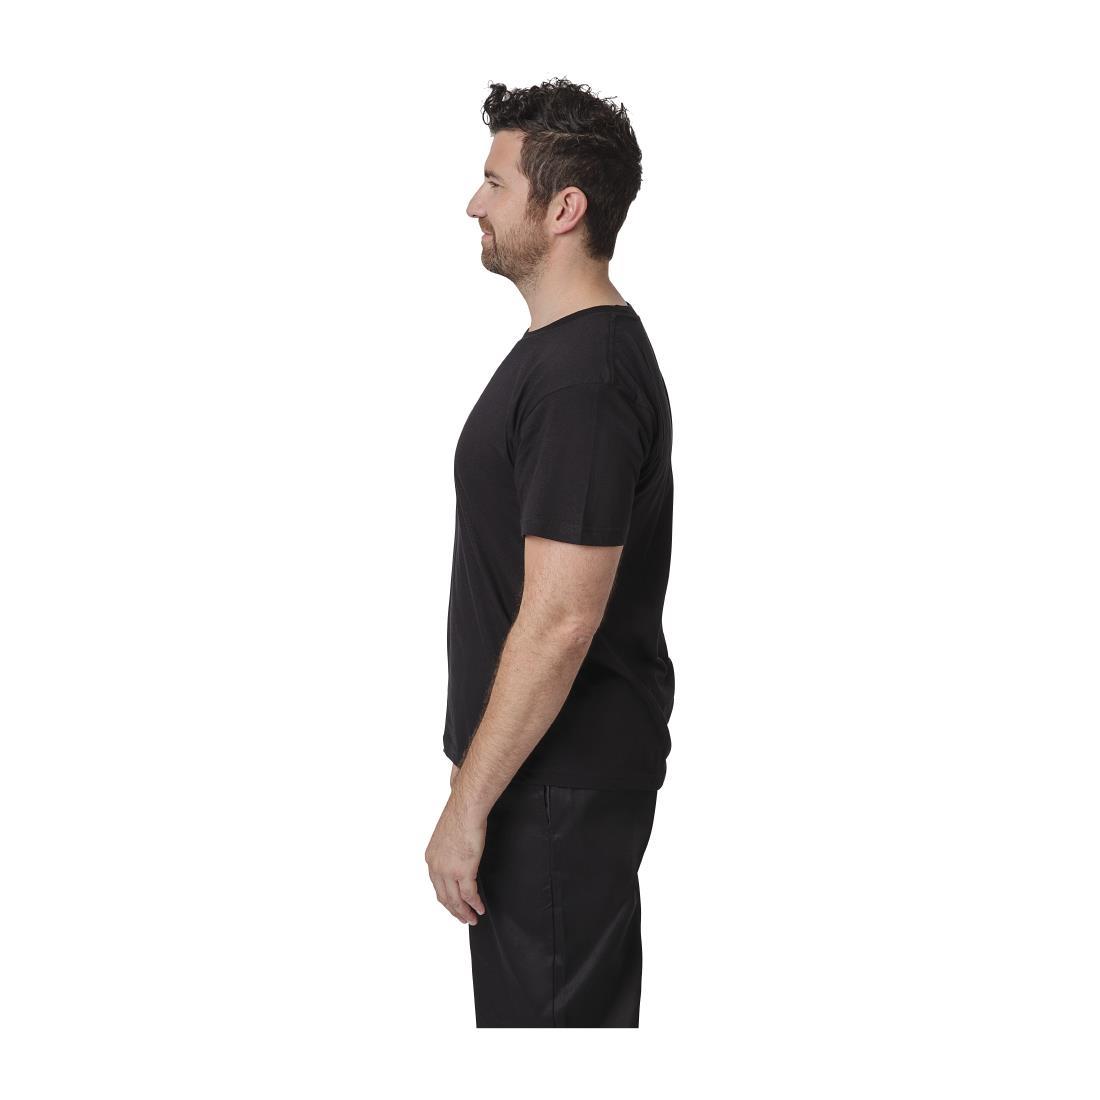 Unisex Chef T-Shirt Black XL - A295-XL  - 4